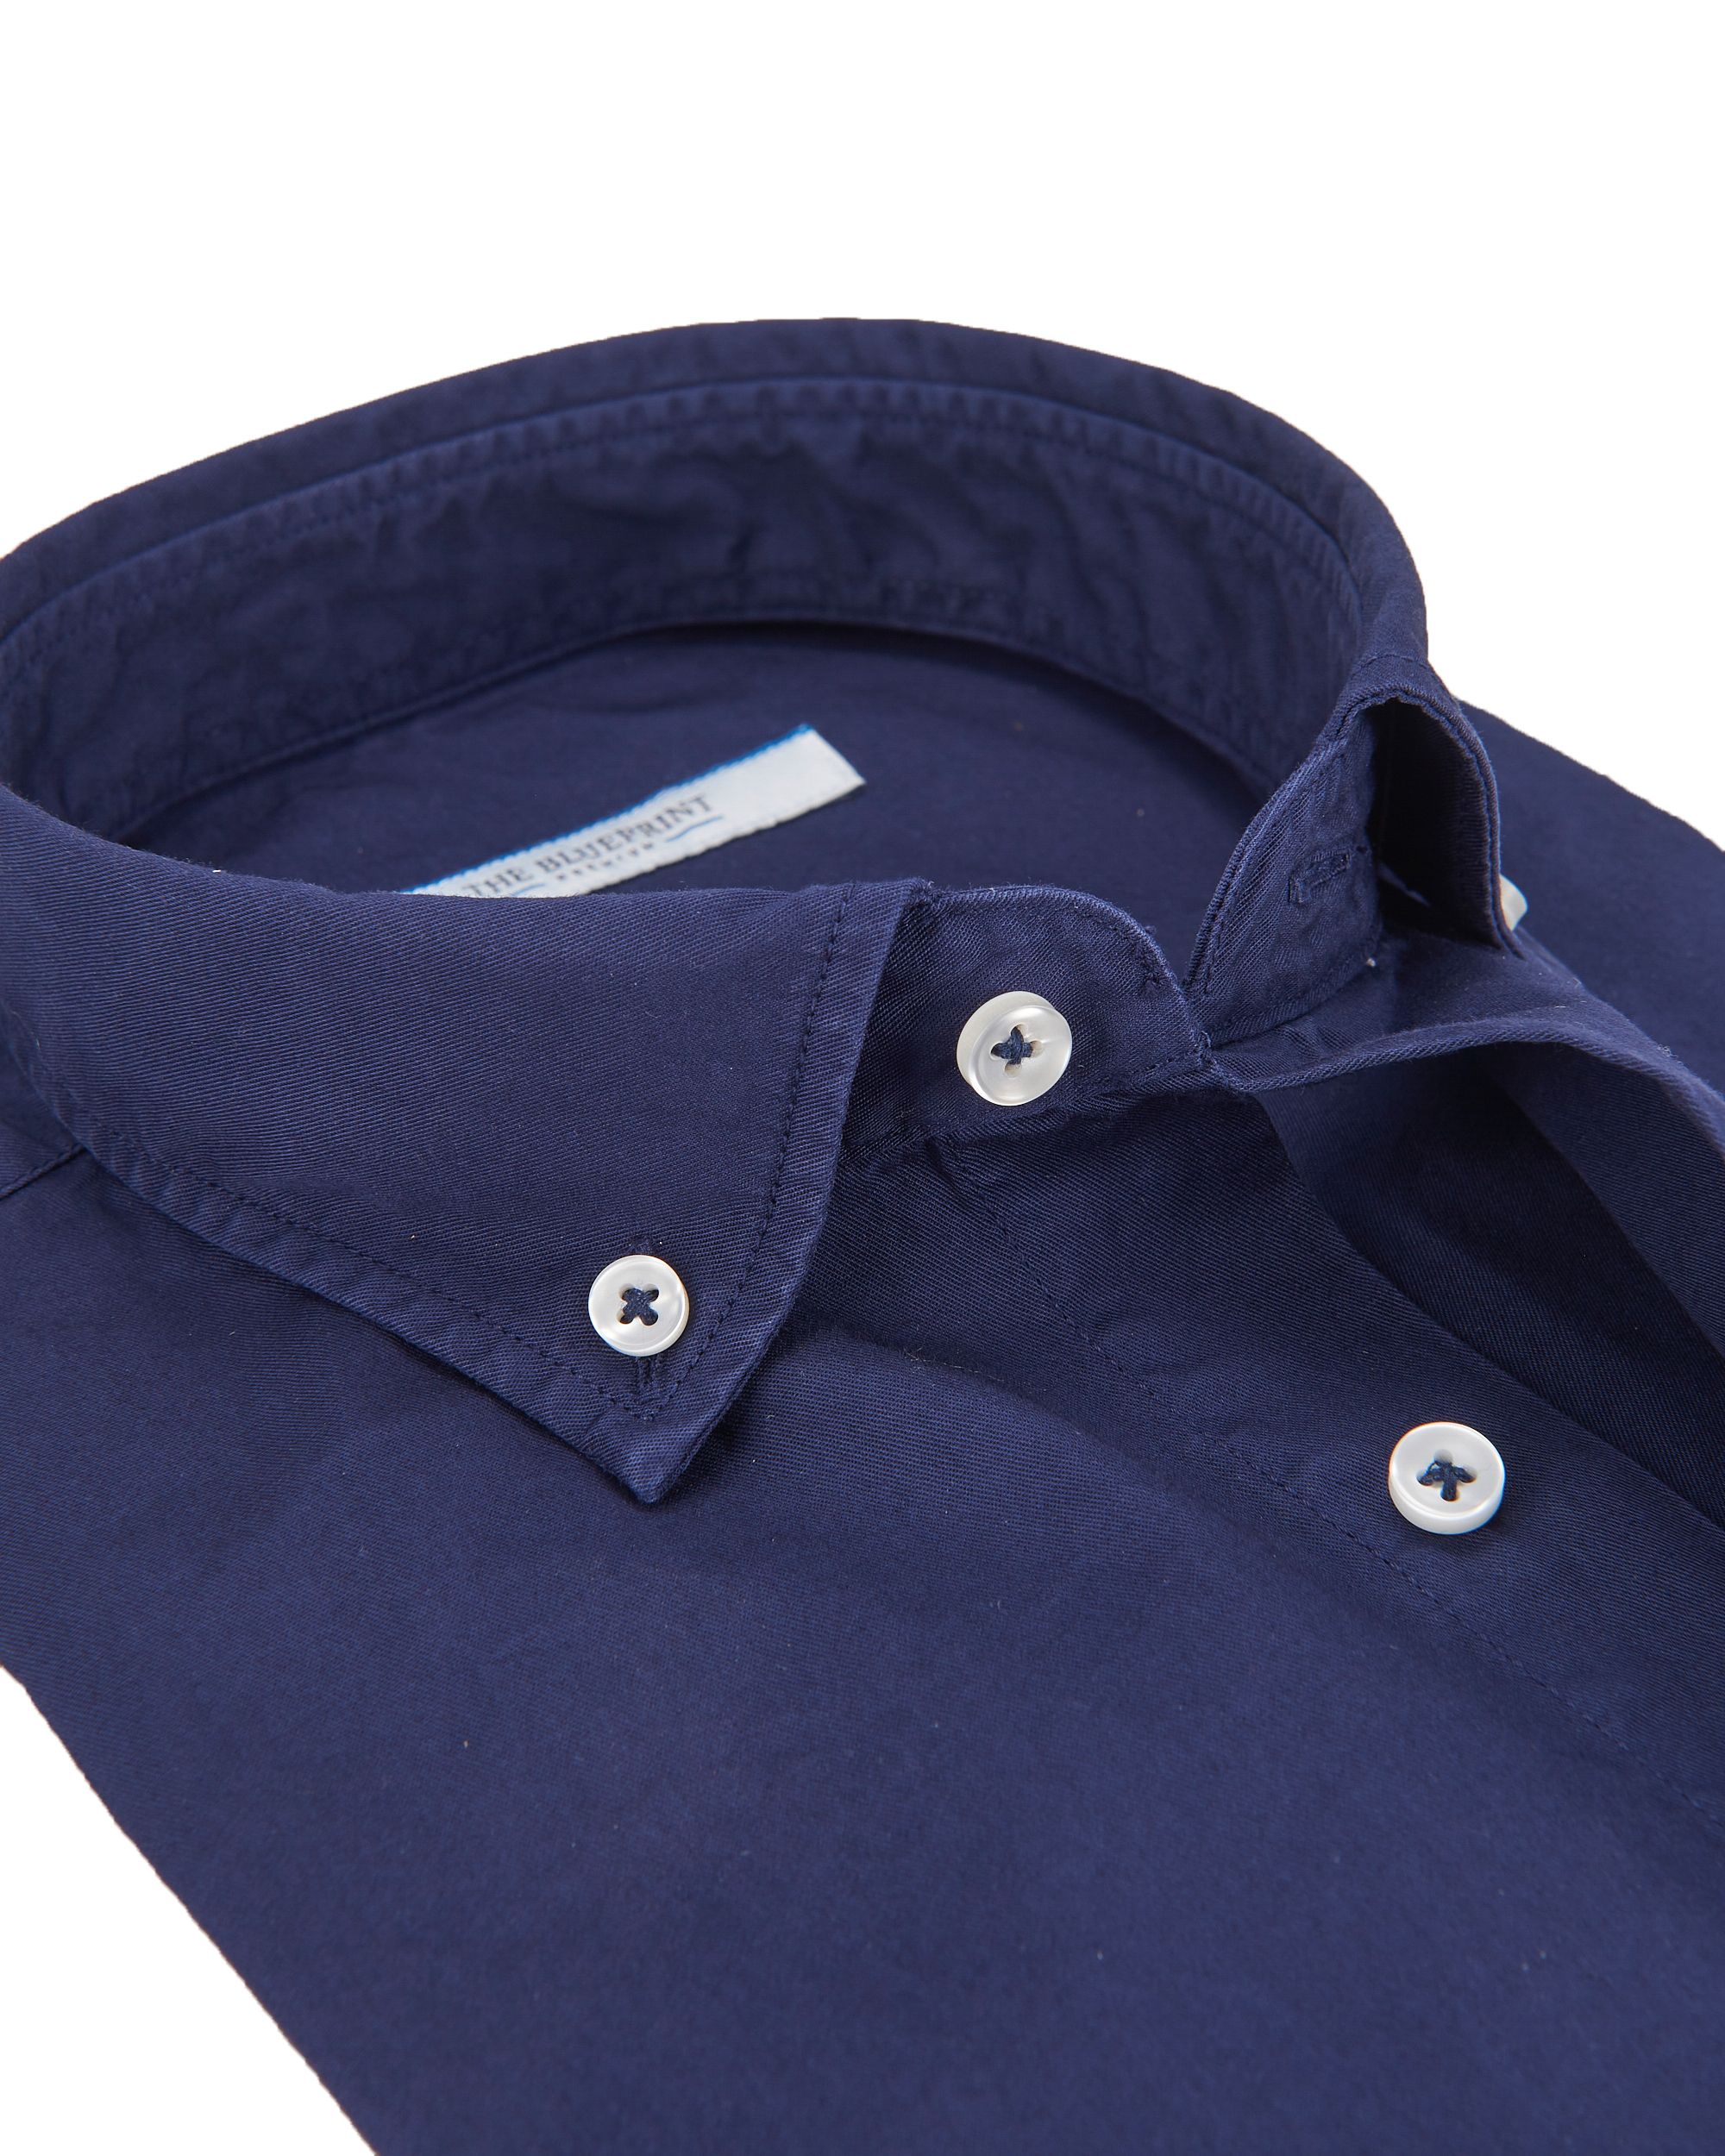 The BLUEPRINT Overhemd LM Donkerblauw uni 075032-001-L